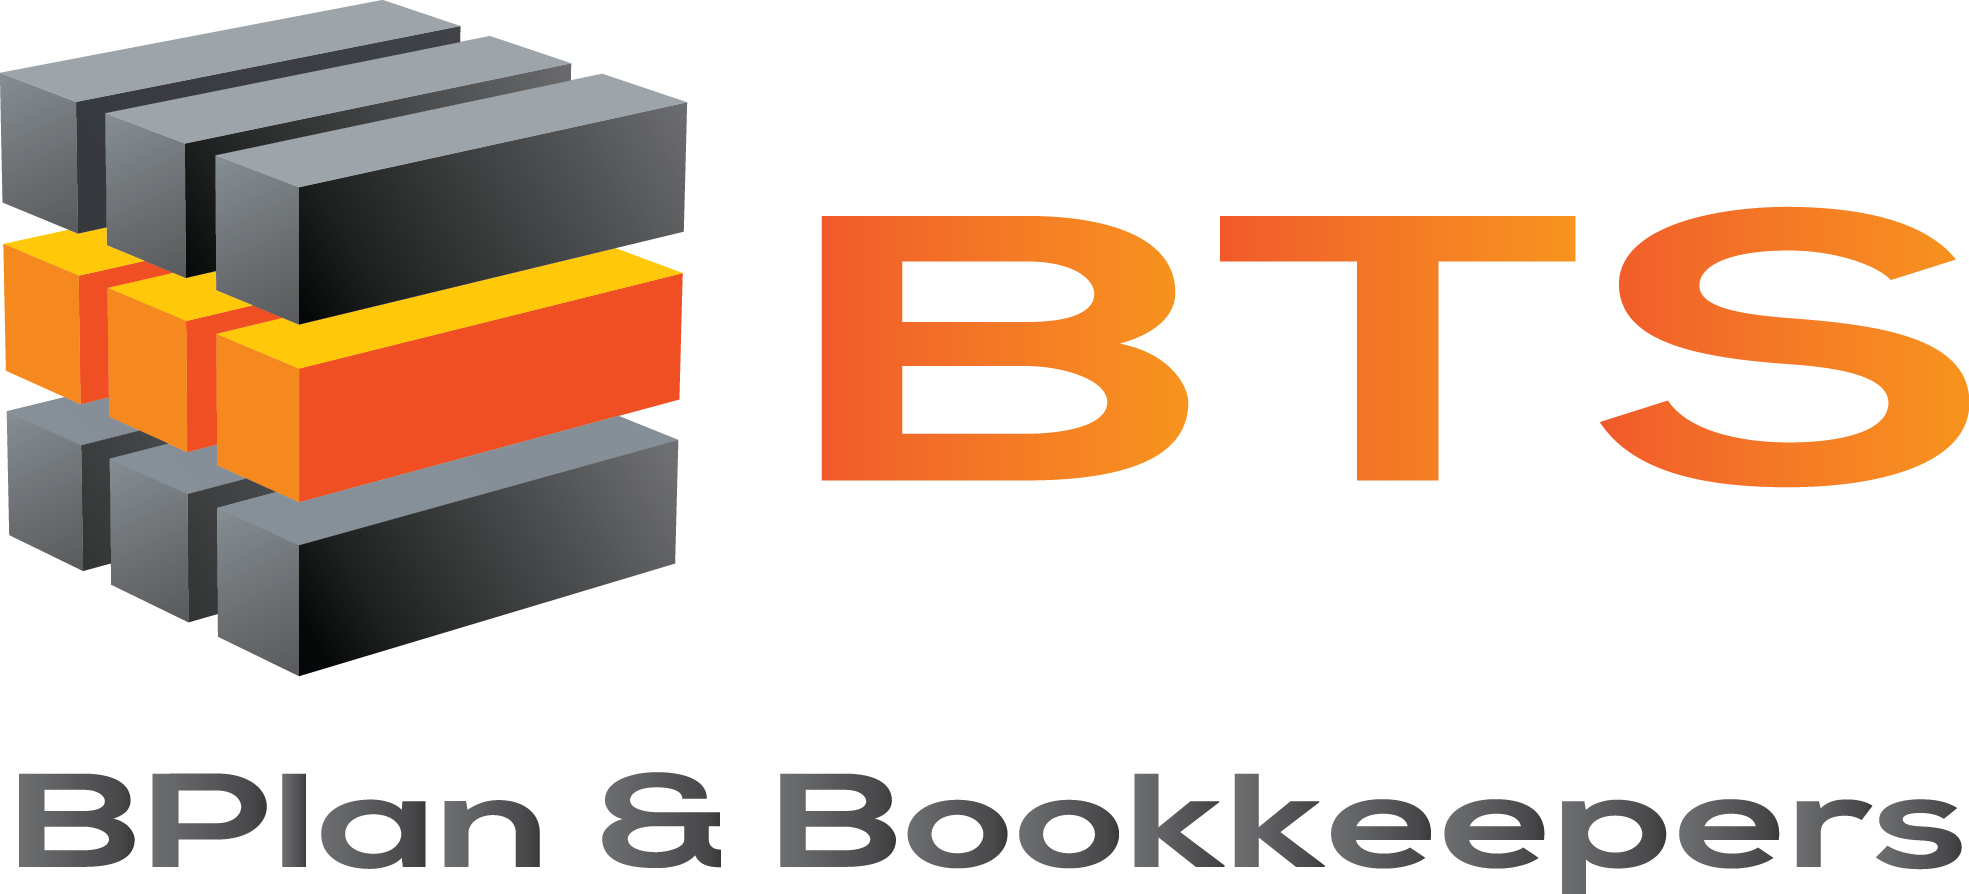 Bts-logo - Graphic Design (1969x894)